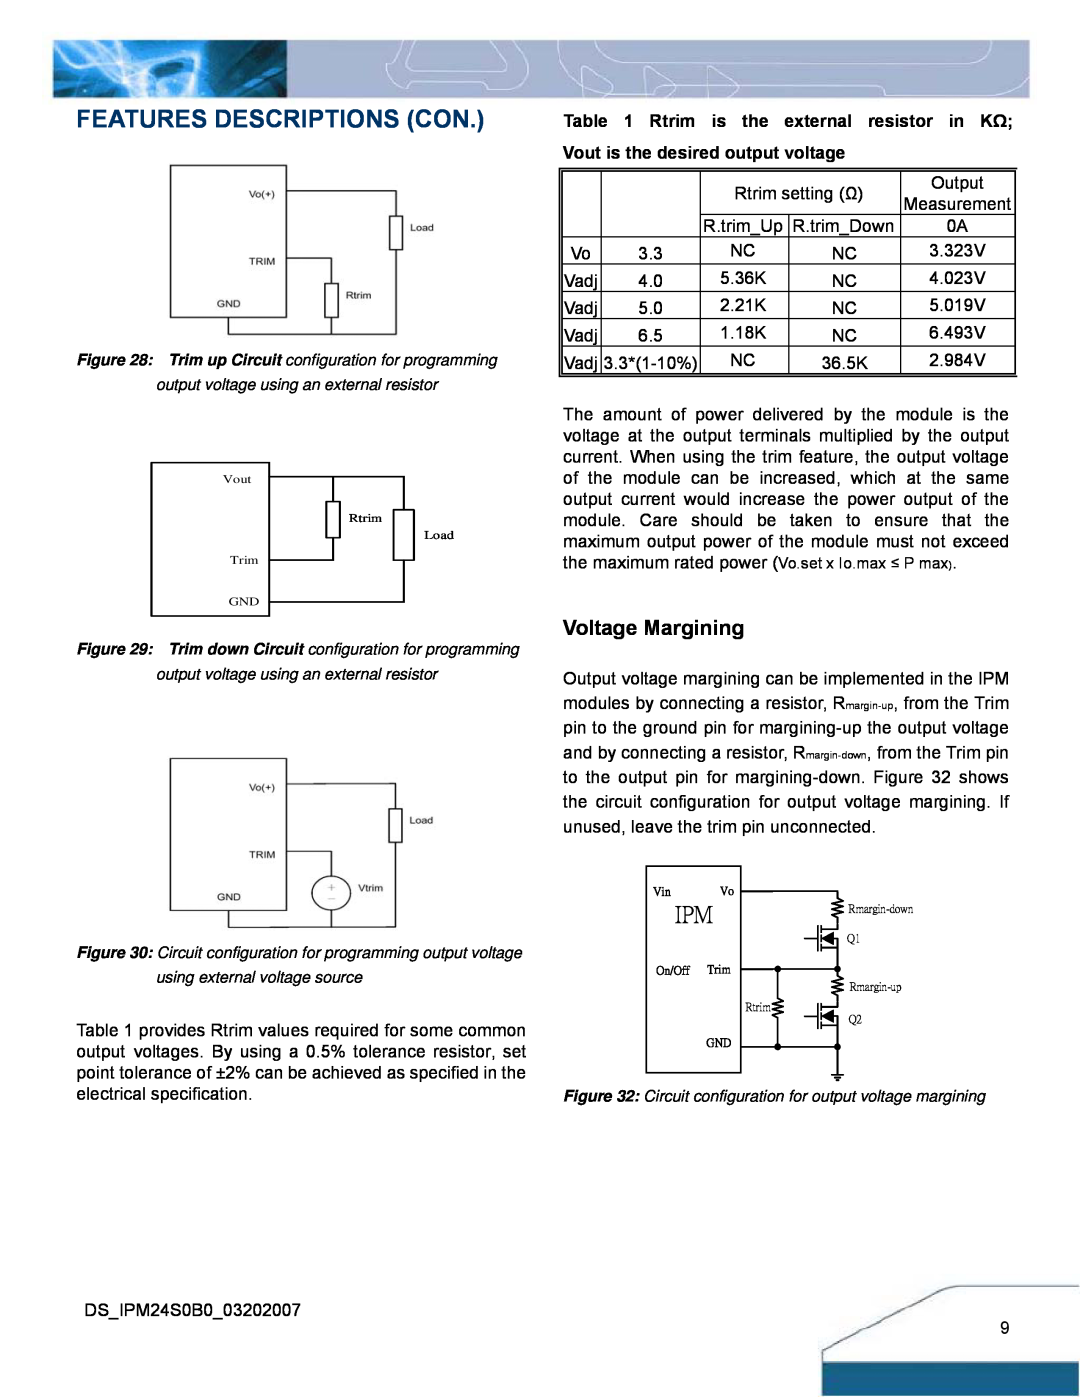 Delta Electronics IPM24S0B0 manual Features Descriptions Con, Voltage Margining 